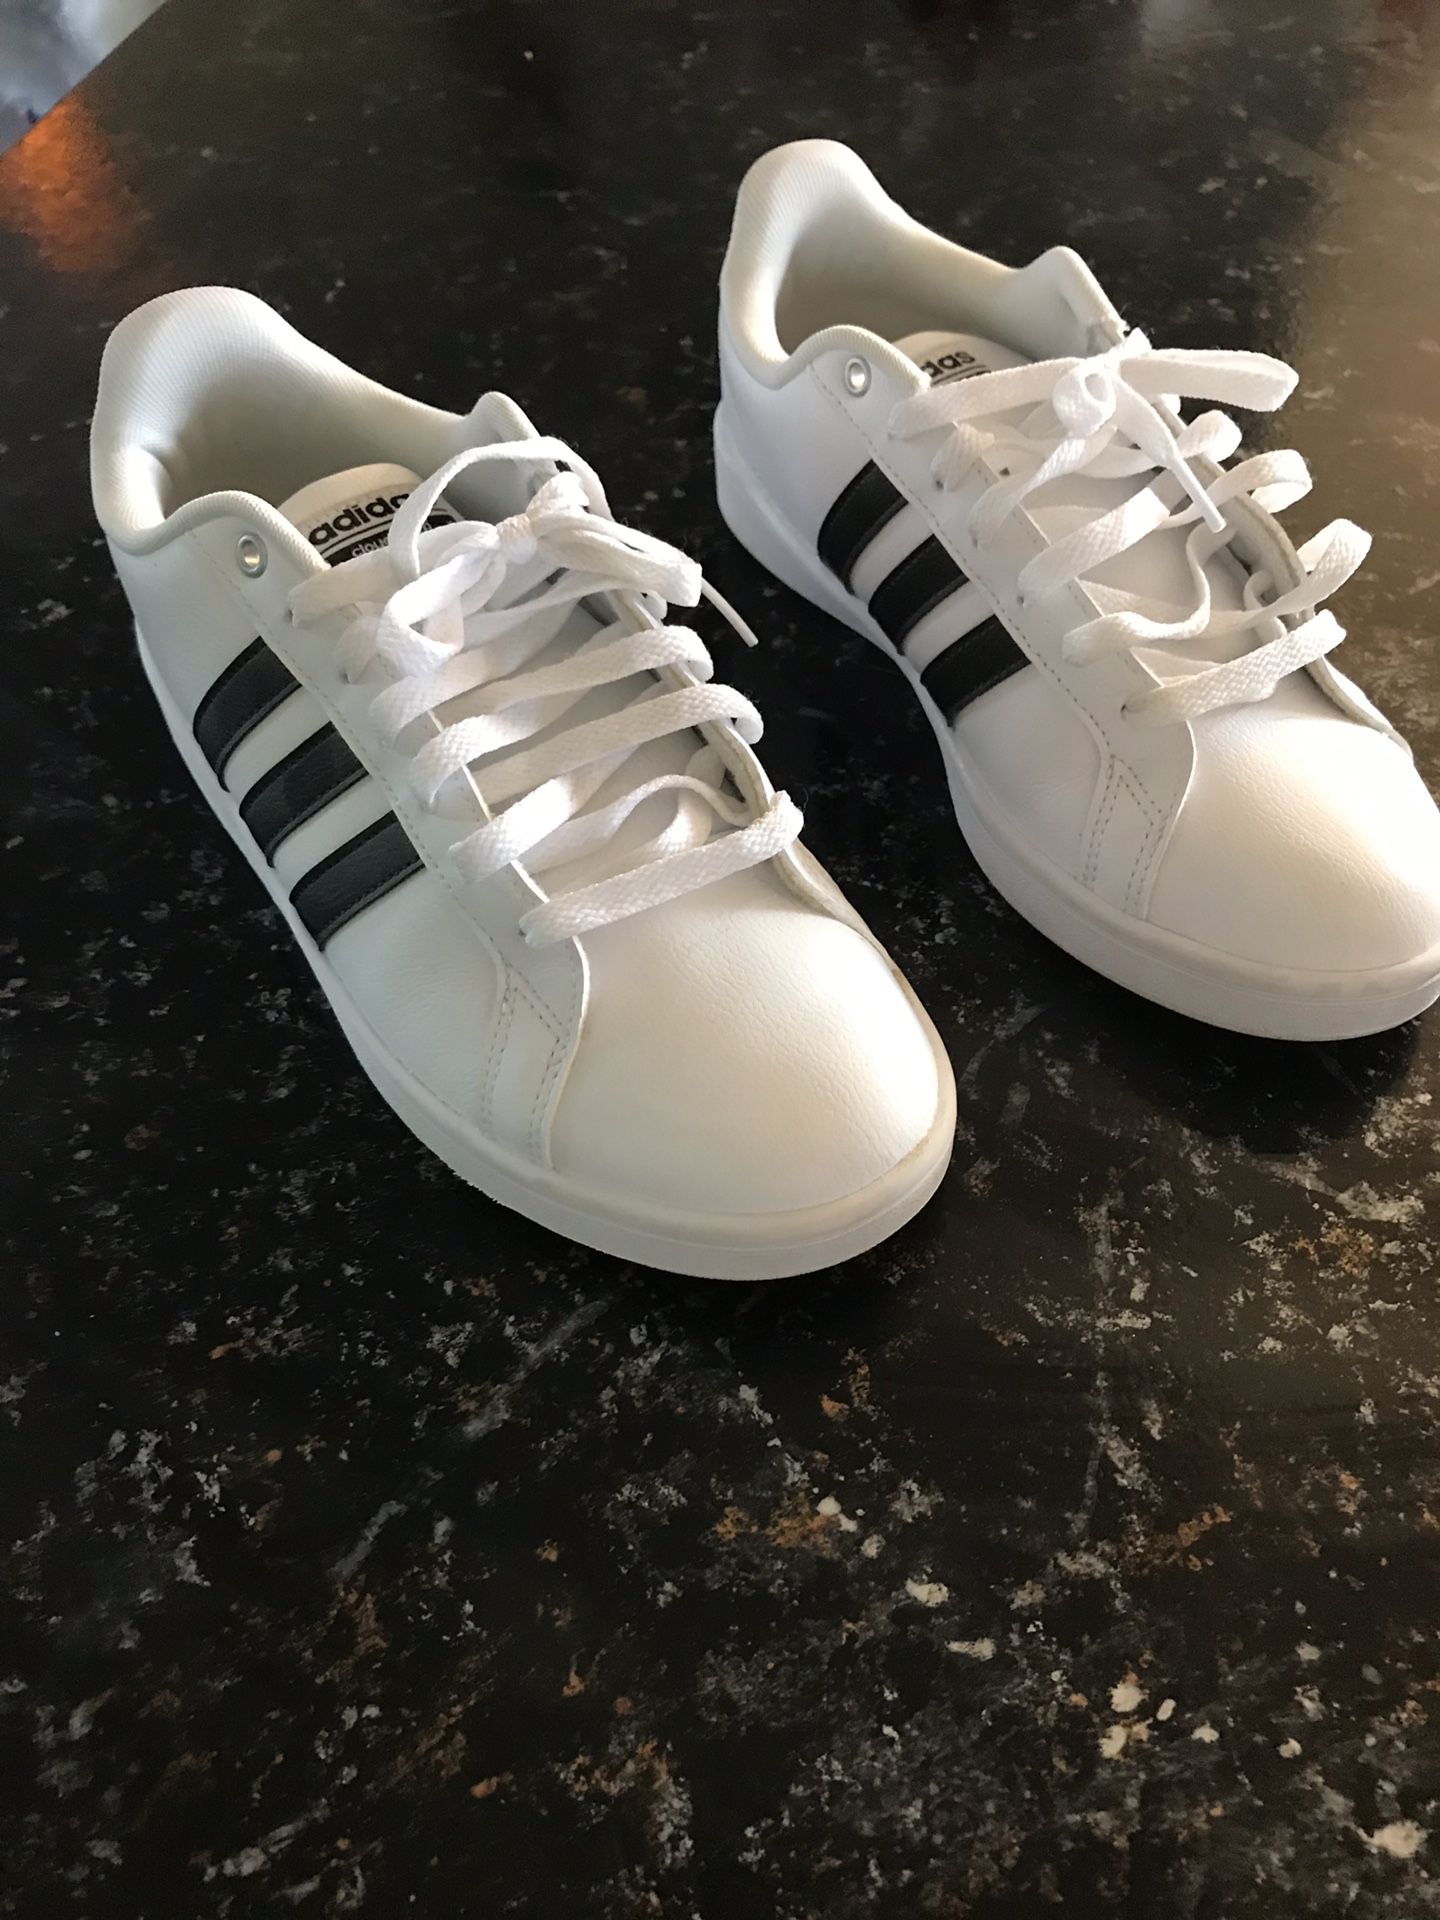 Adidas size 8 men’s white and black striped logo shoes.